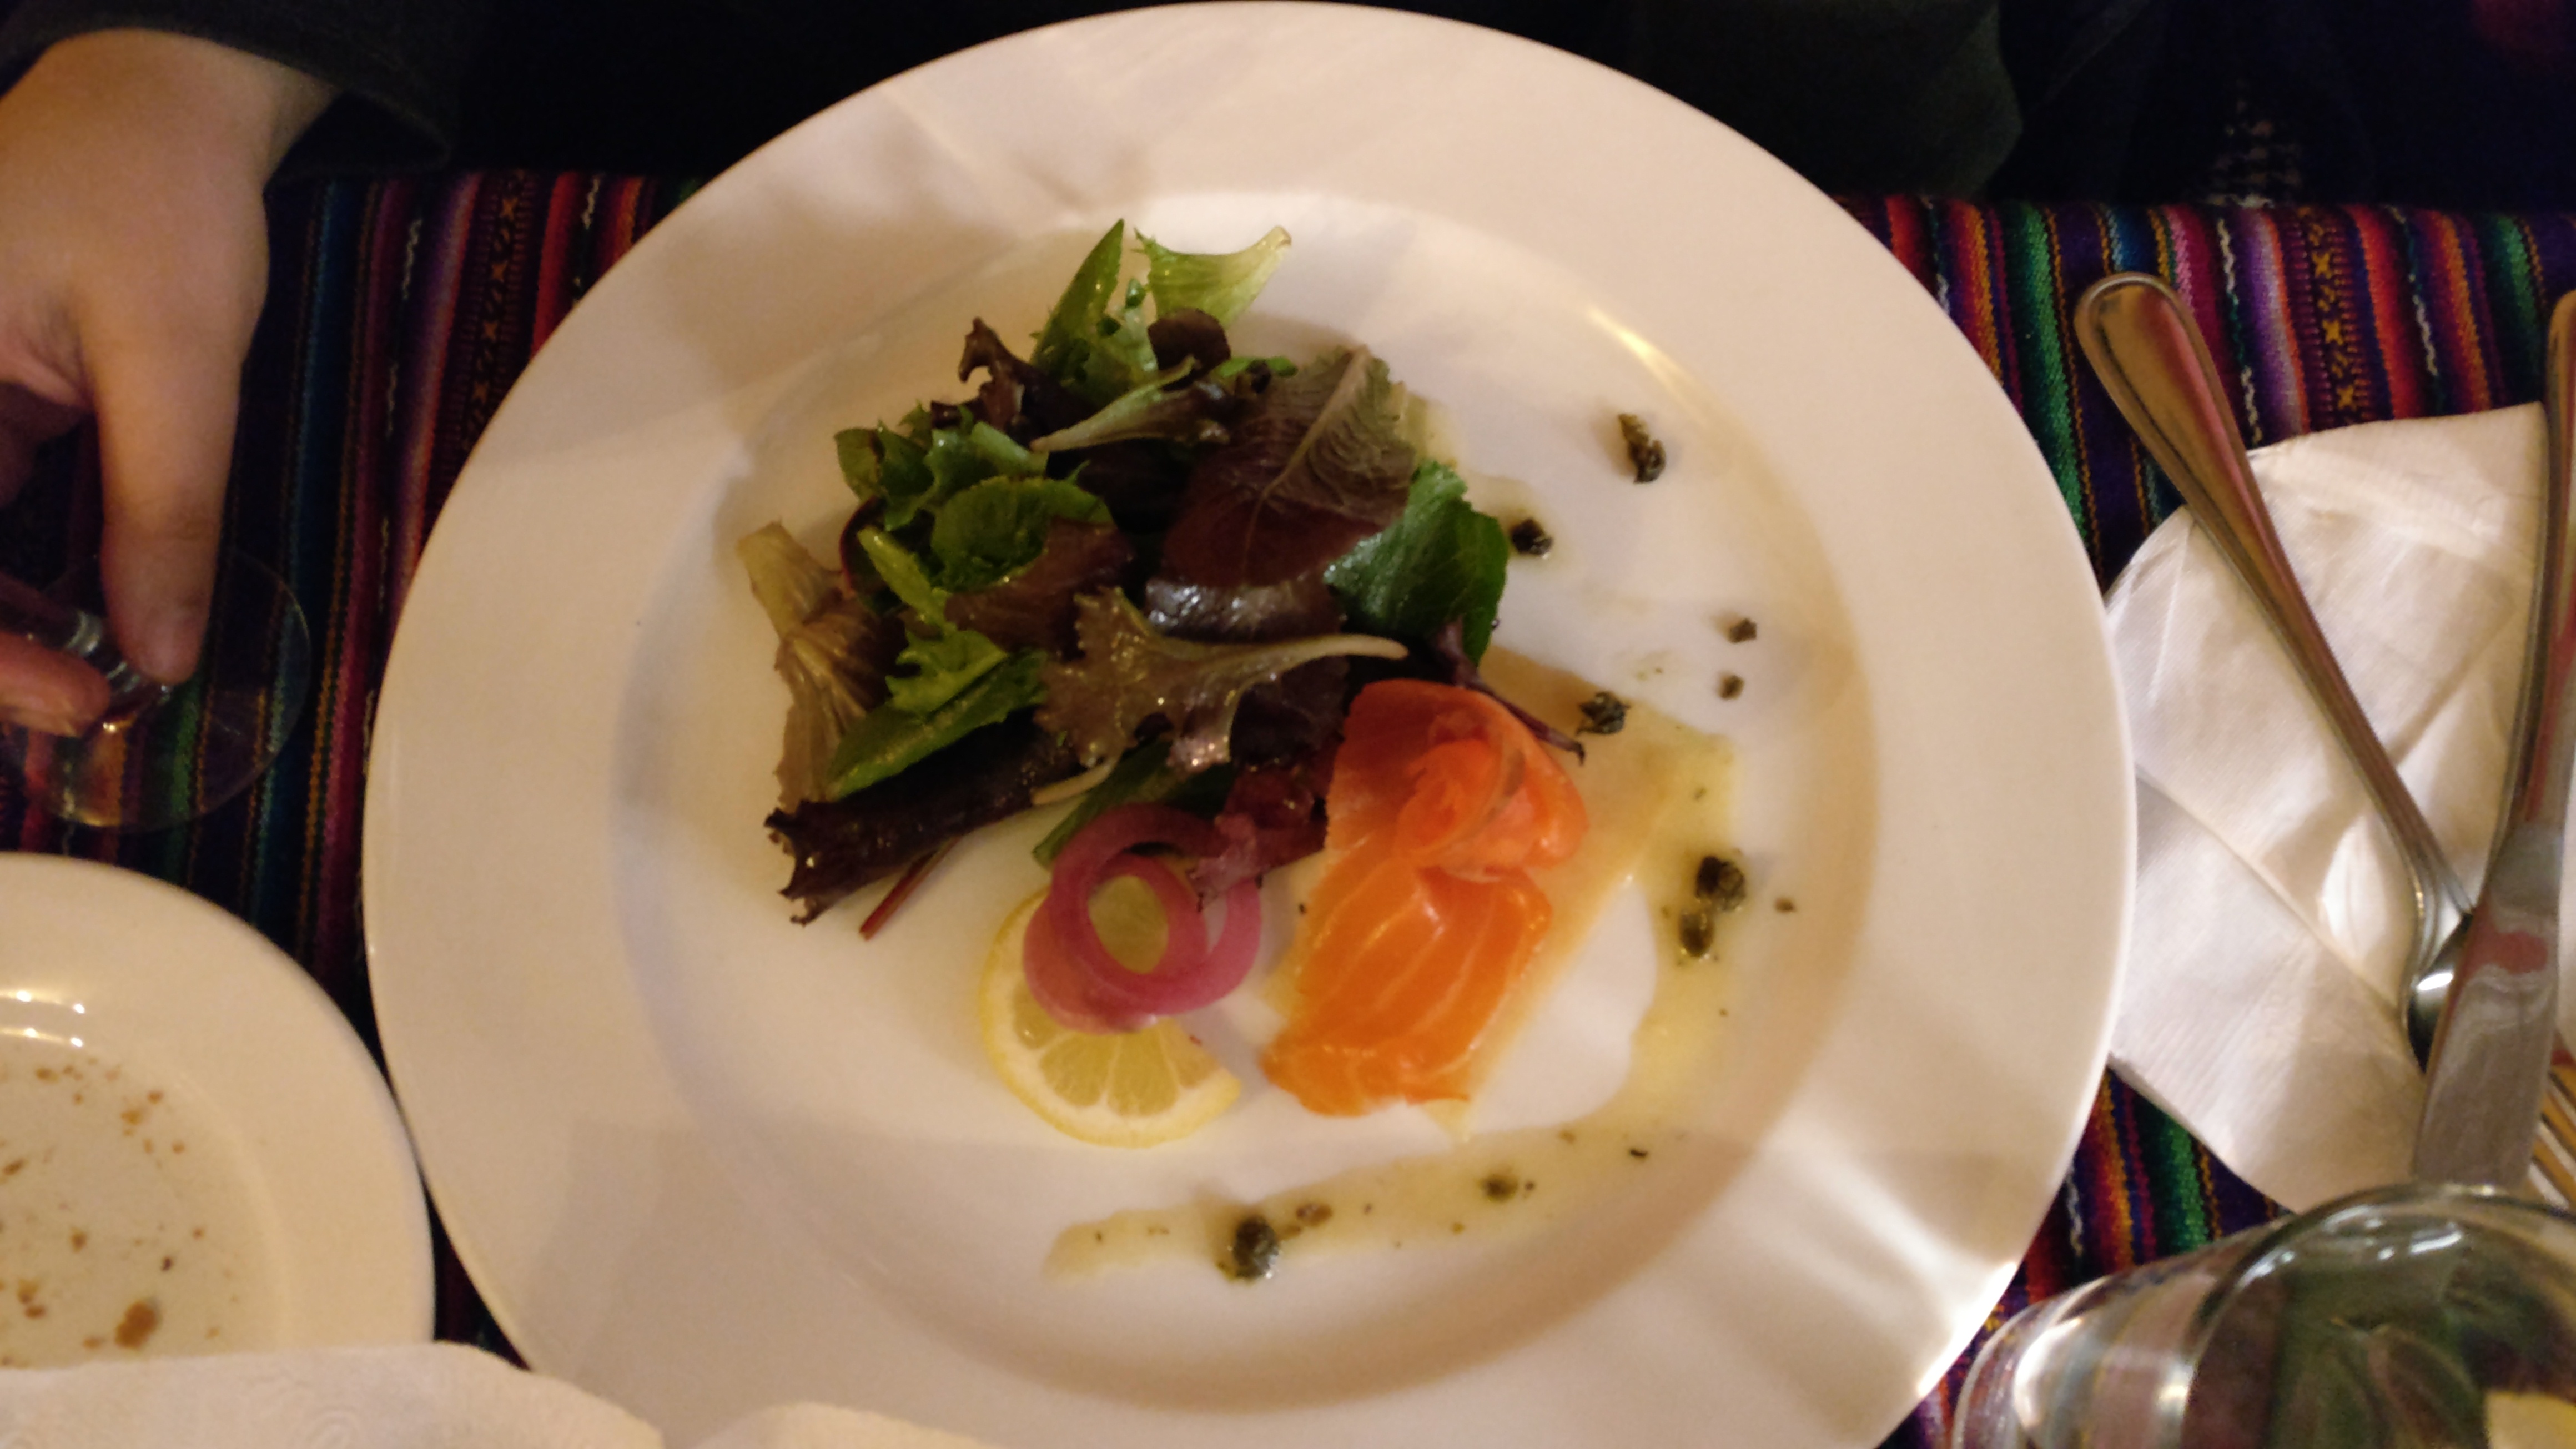 Smoked salmon slices next to a leafy green salad